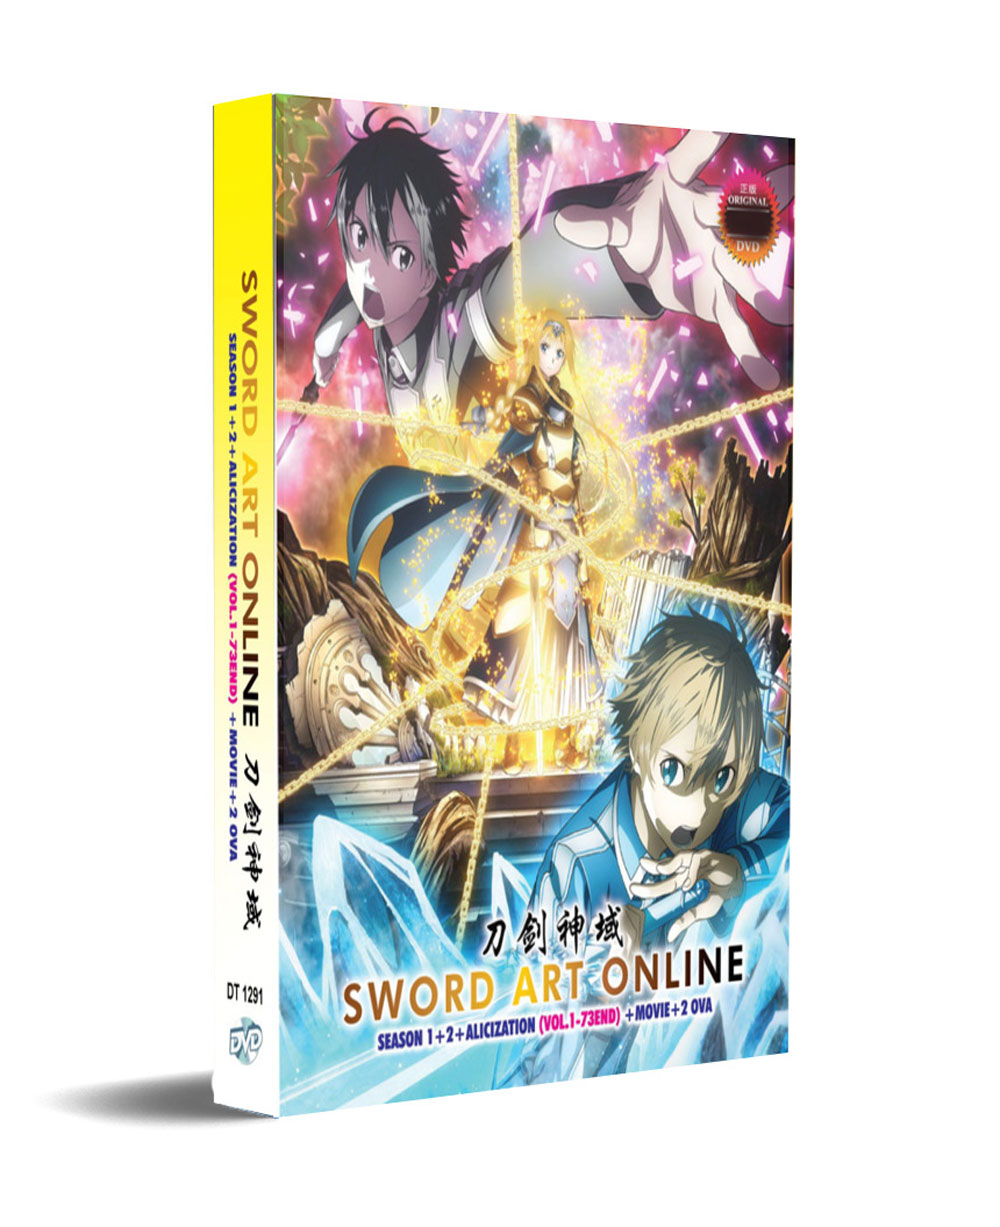 Sword Art Online Season 1+2+Alicization + Movie + 2 OVA (DVD) (2012-2018) 動畫